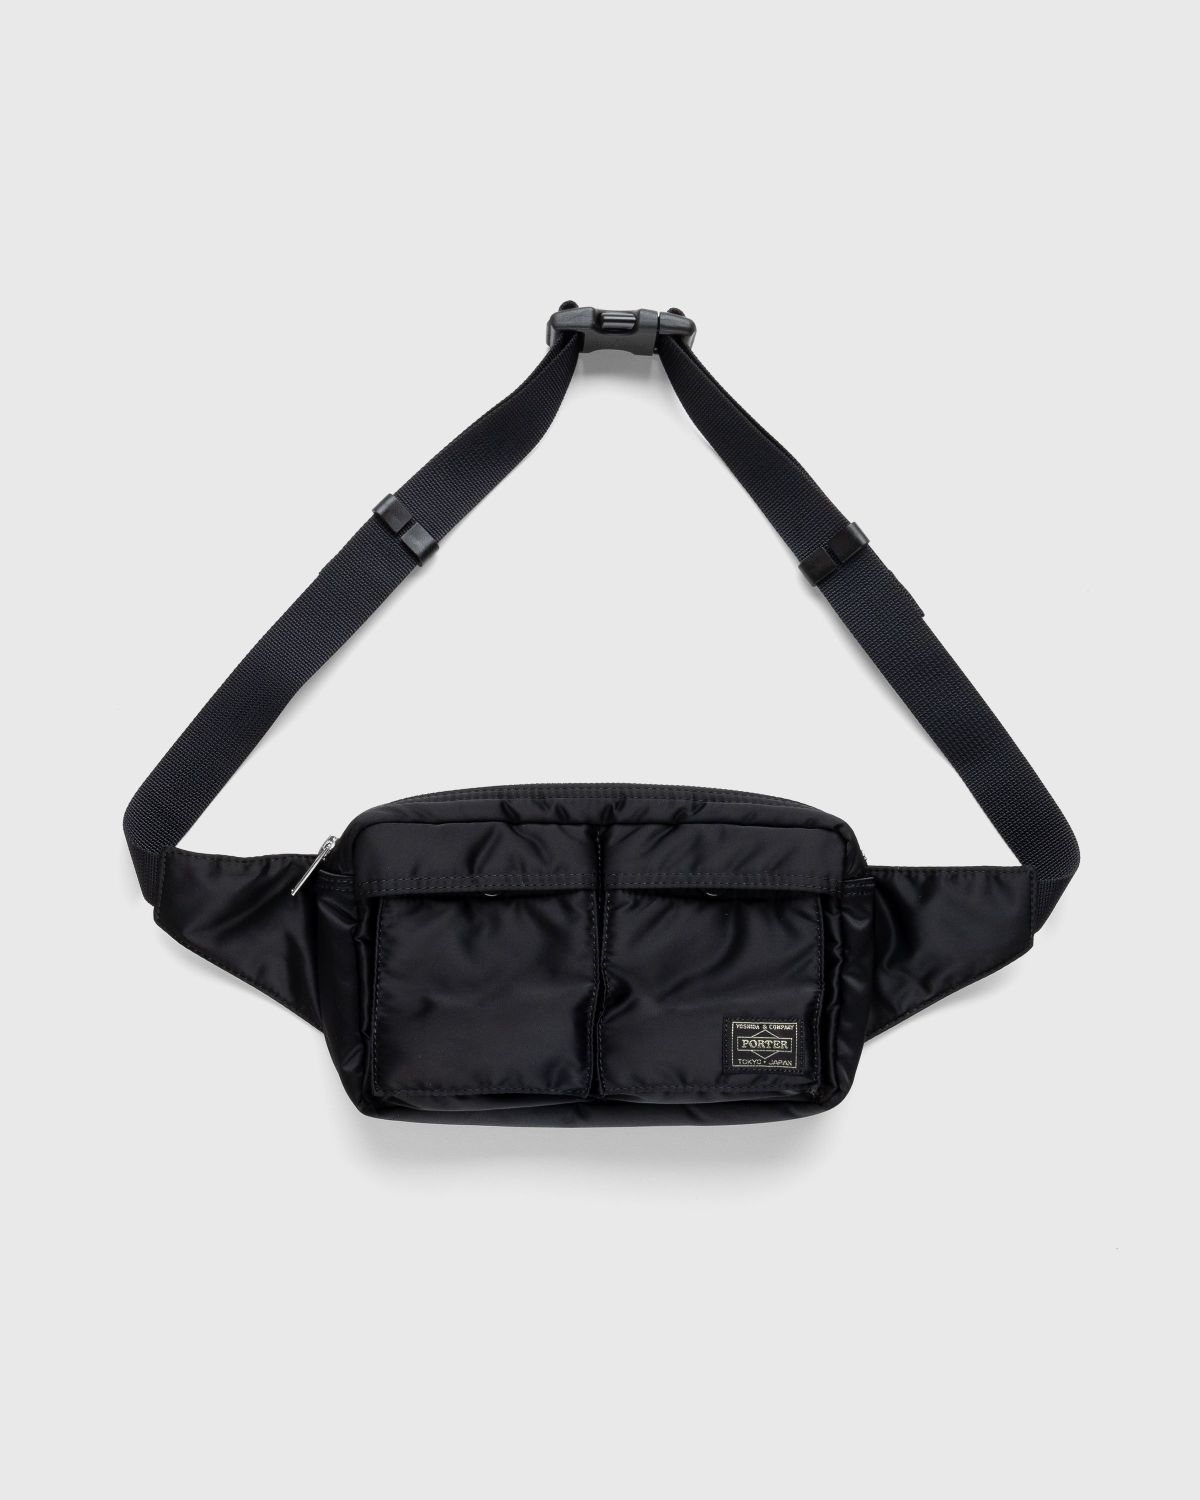 Porter-Yoshida & Co. – Tanker Waist Bag Black